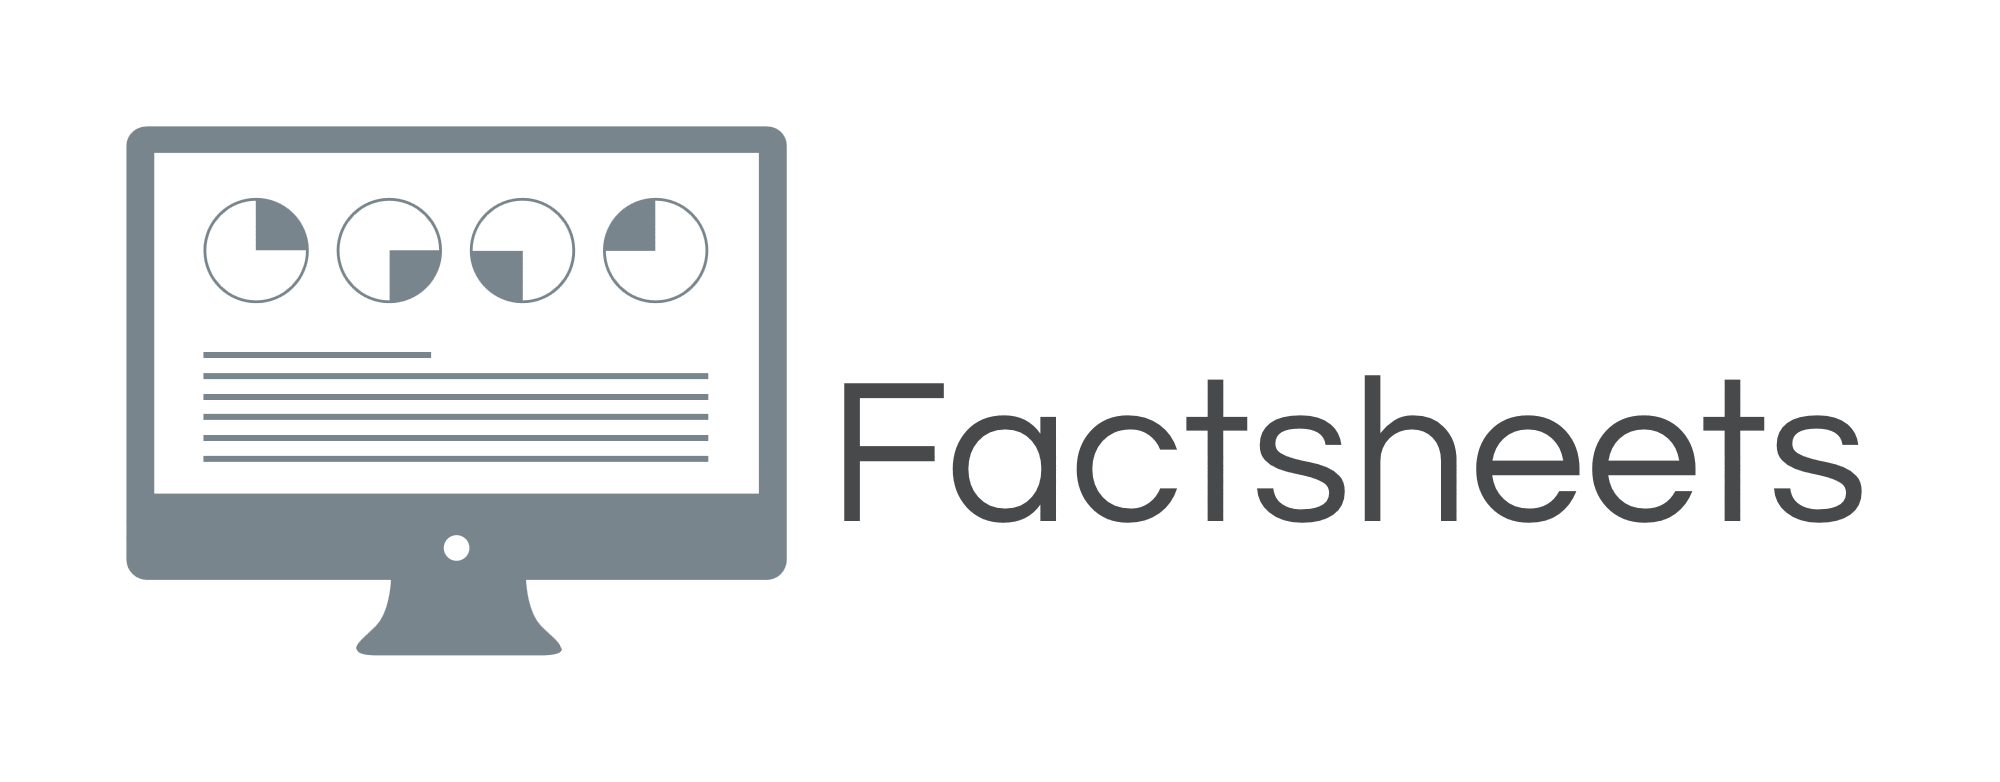 Factsheets-logo.png